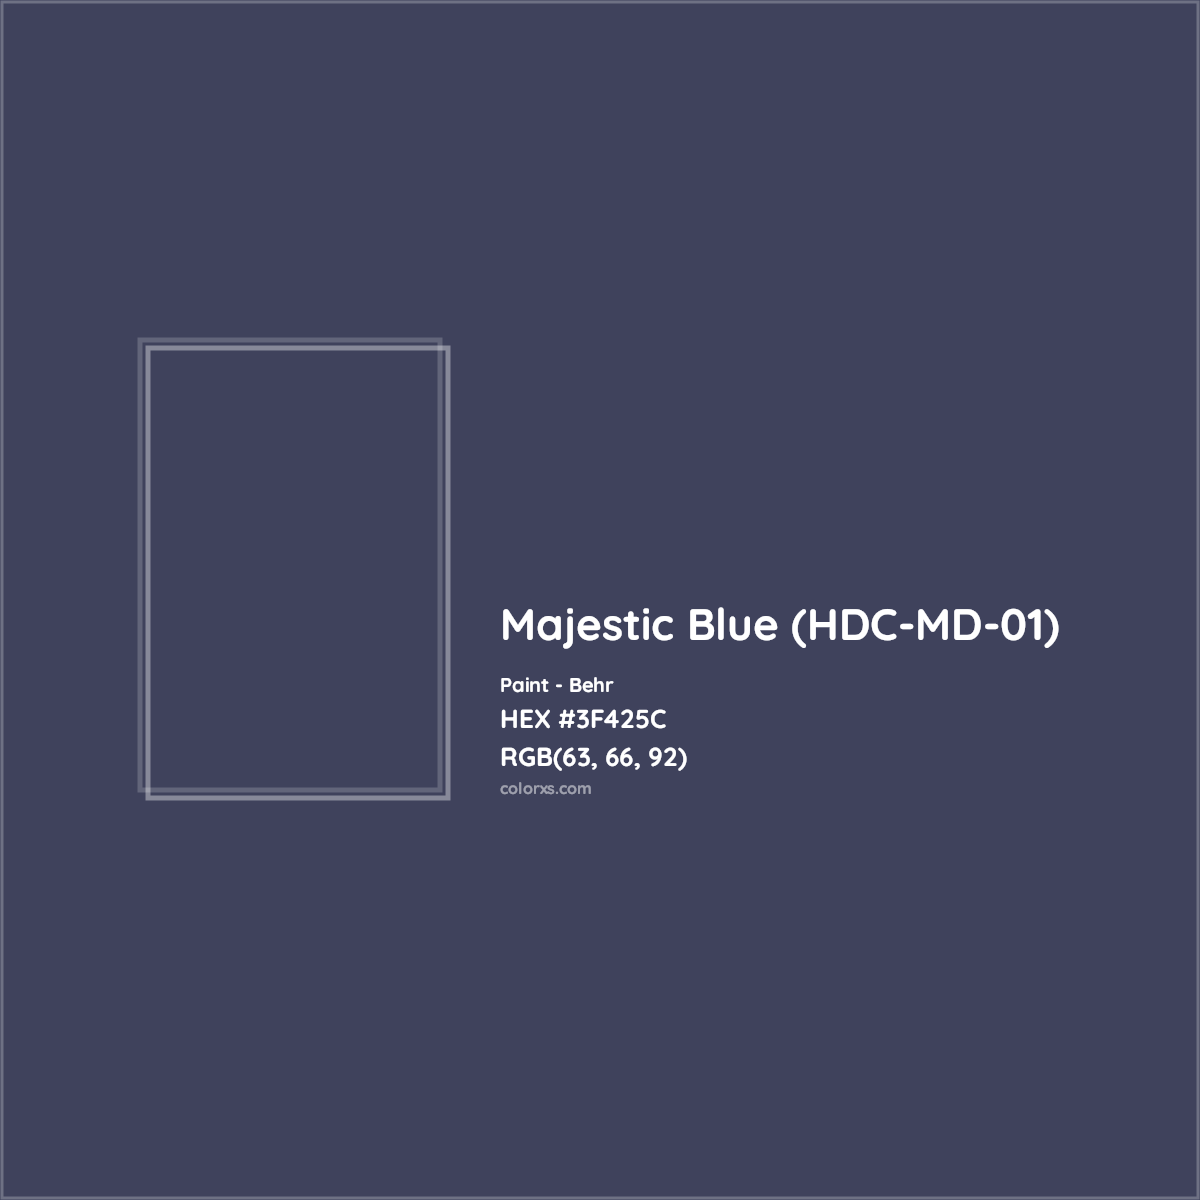 HEX #3F425C Majestic Blue (HDC-MD-01) Paint Behr - Color Code